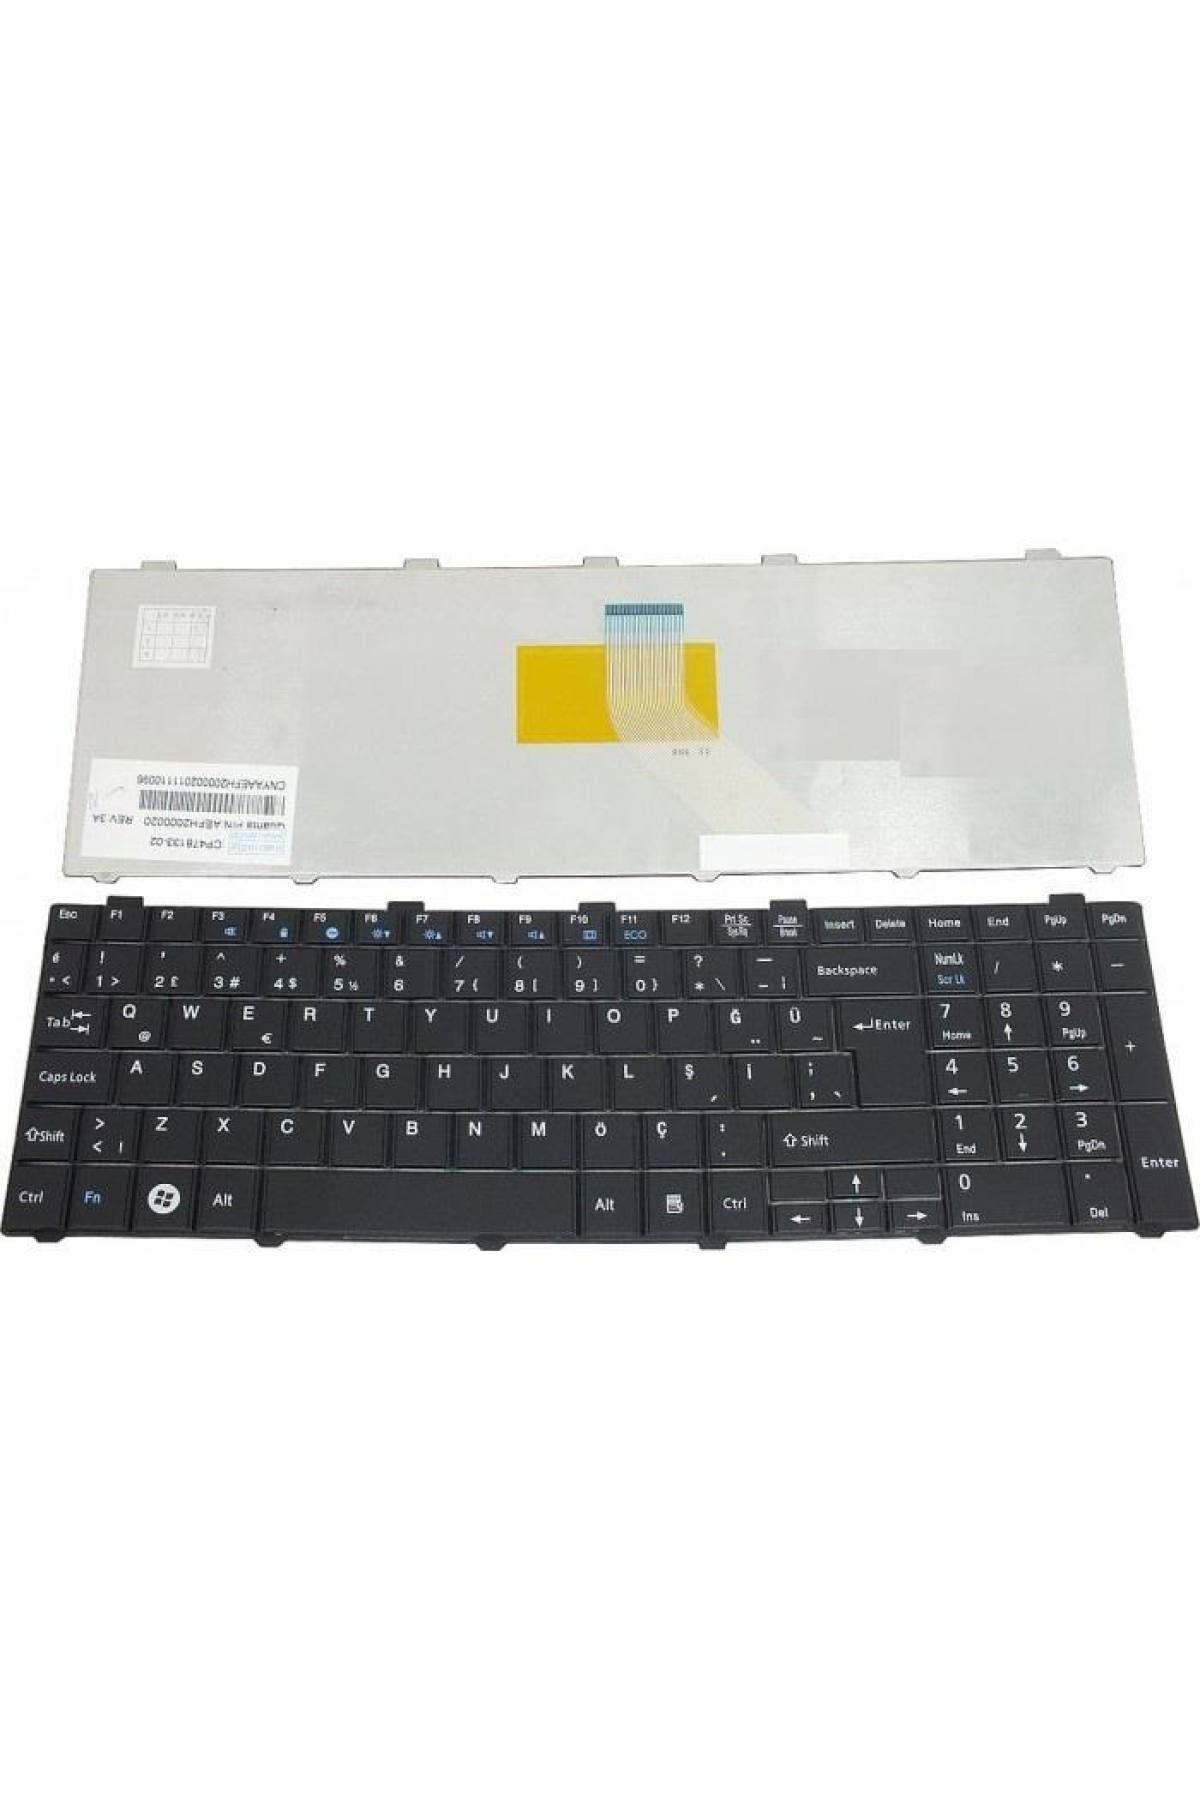 Fujitsu Siemens ile Uyumlu AEFH2000020, AH531MRSE5TR Notebook Klavye Siyah TR